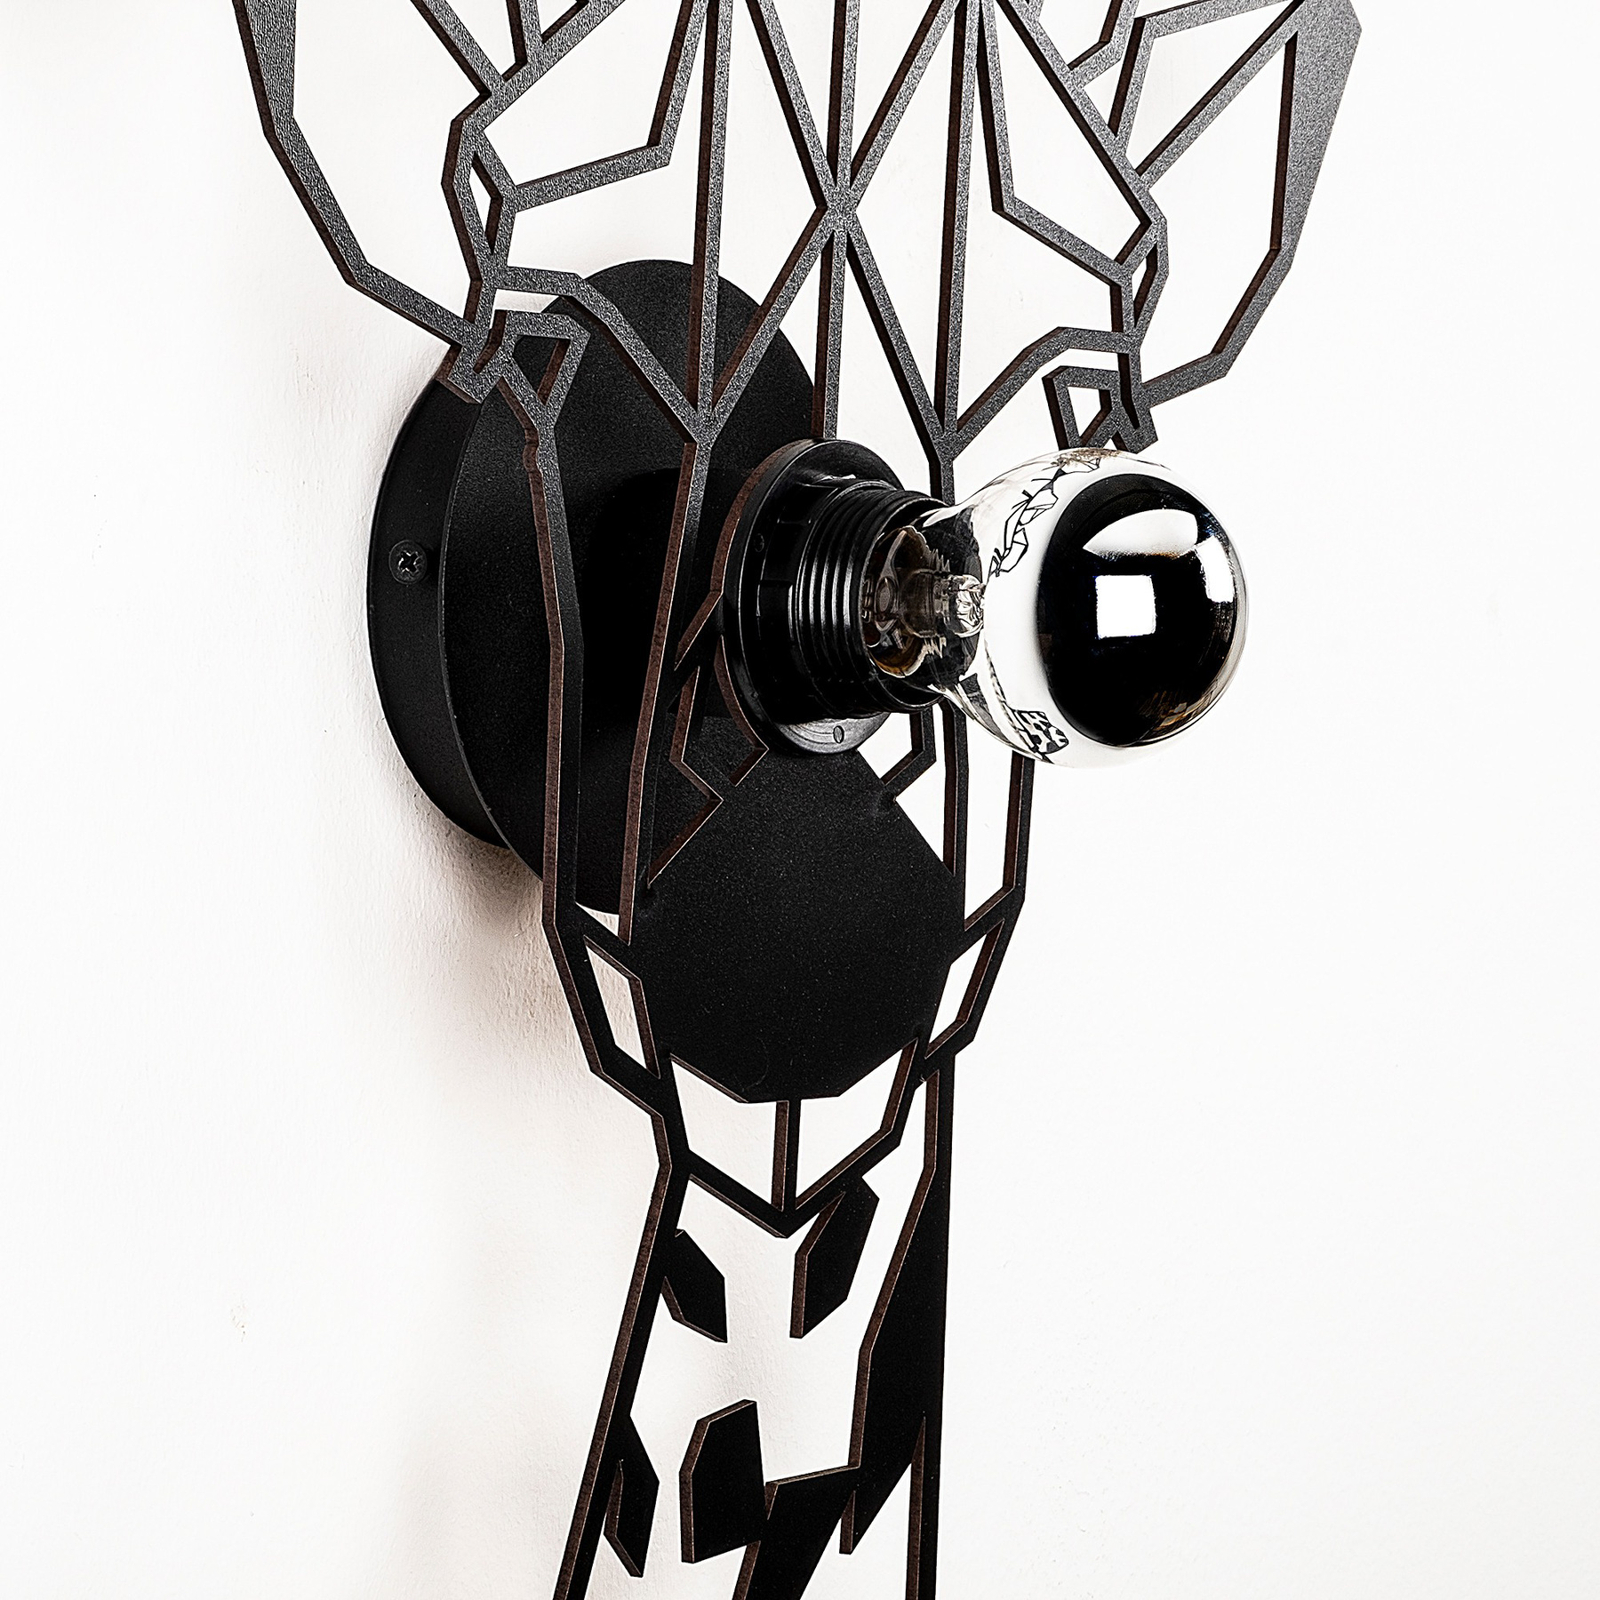 Wandlamp W-029, lasercut, giraffendesign, zwart